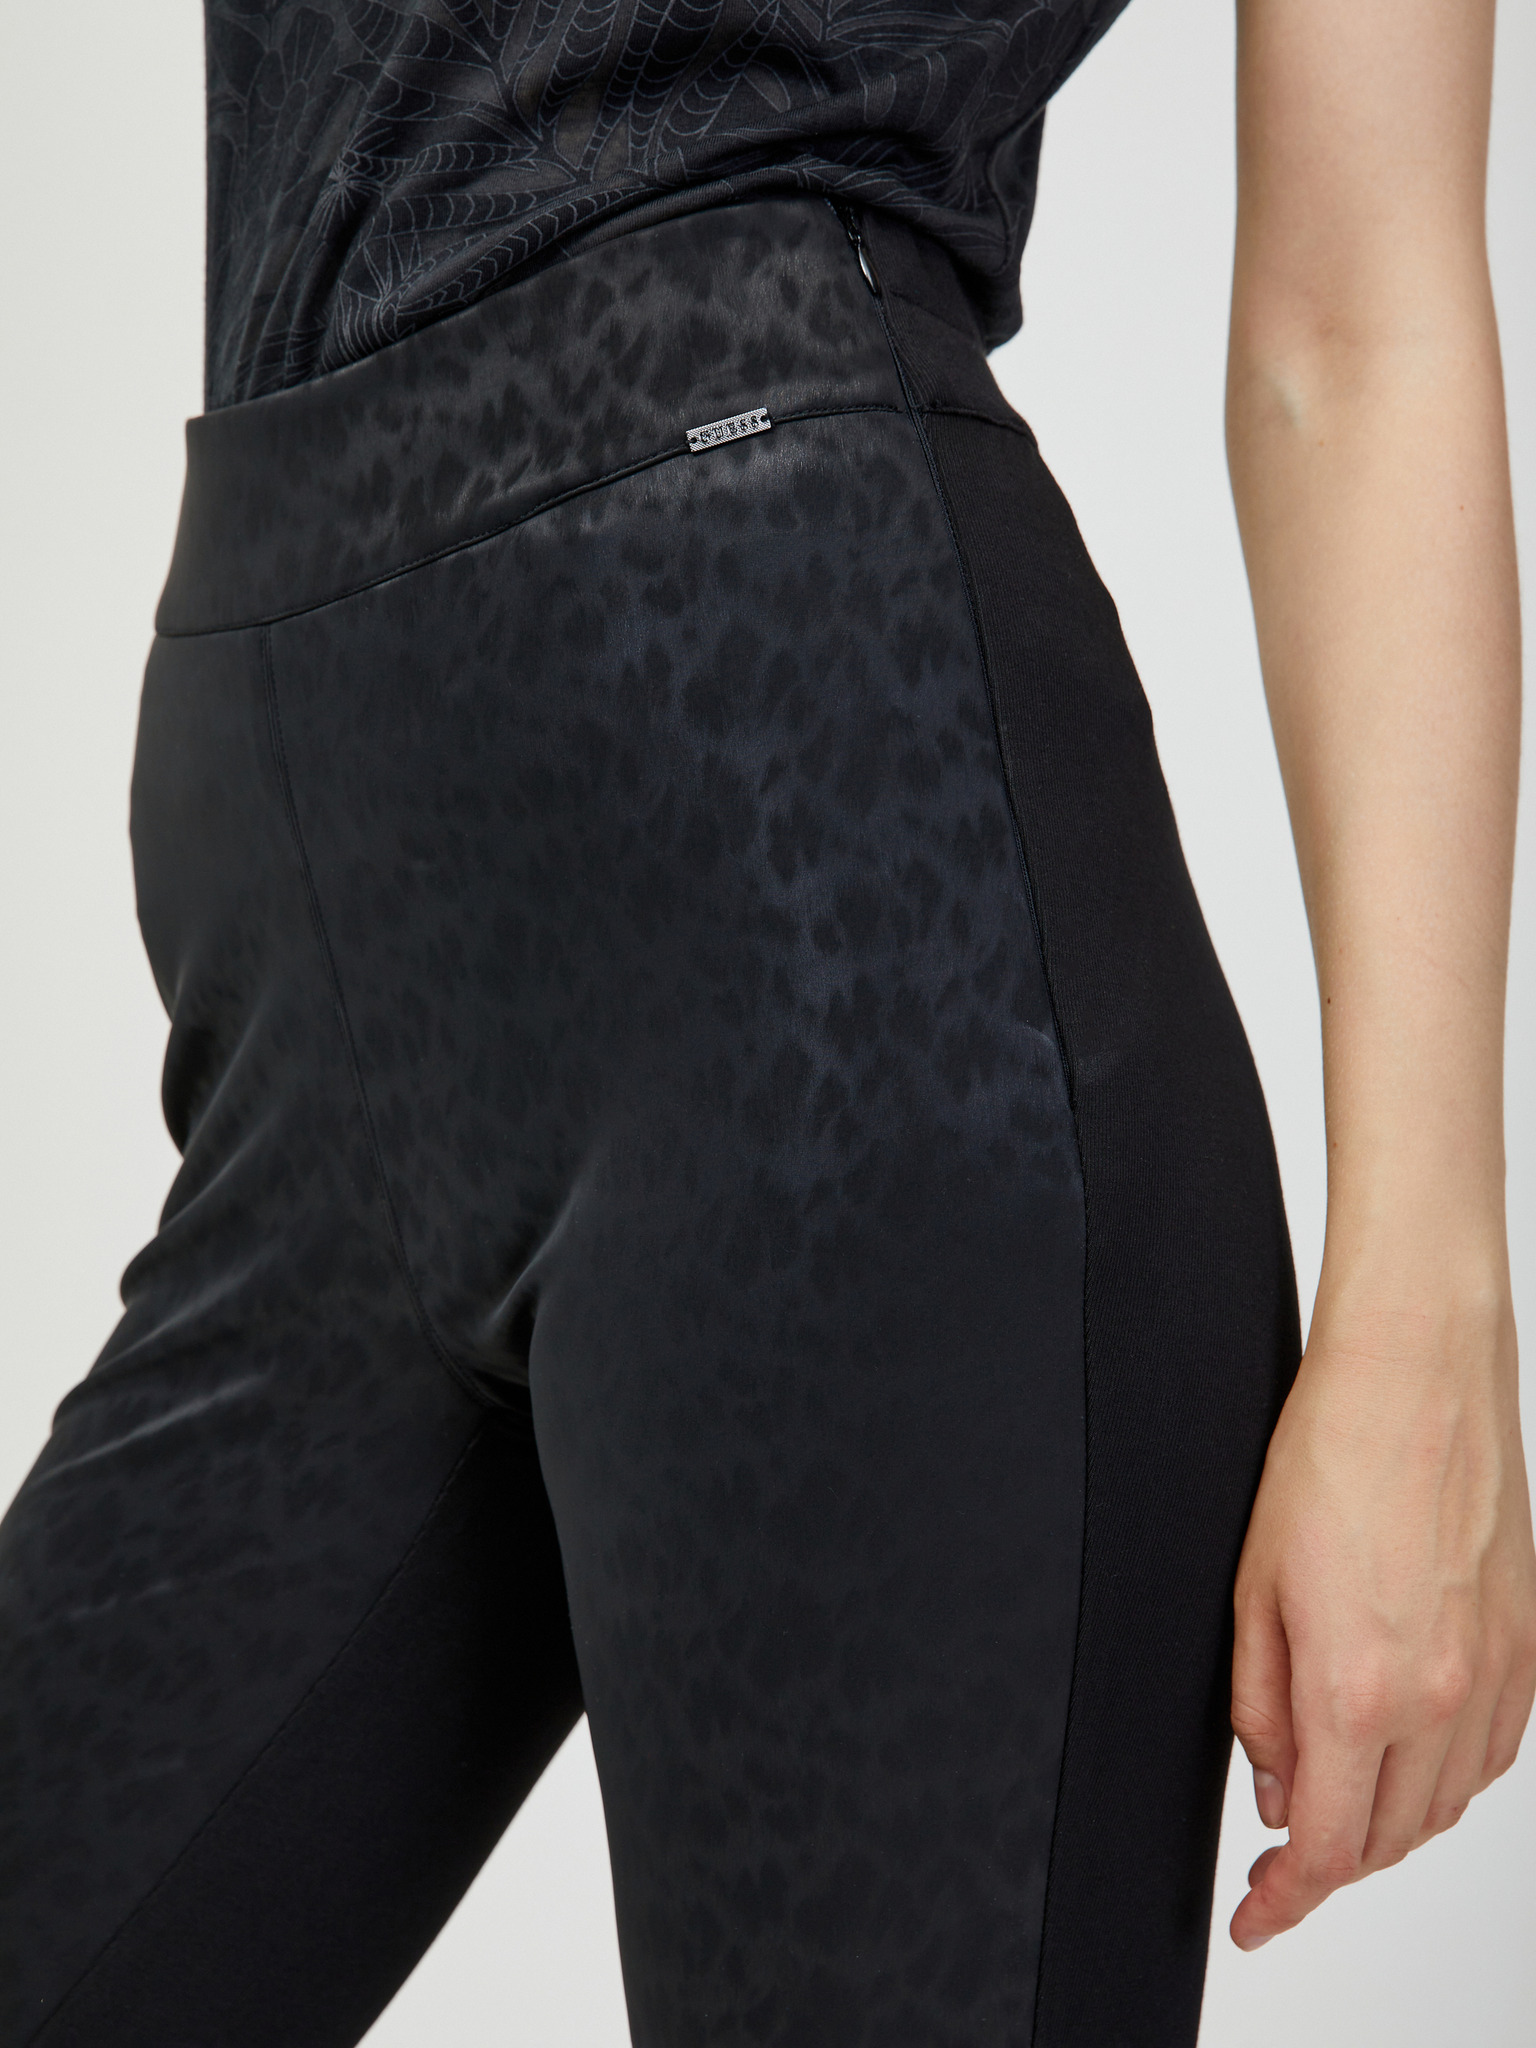 $89 Guess Women's Black Stretch Faux Leather Priscilla Leggings Pants Size  XL